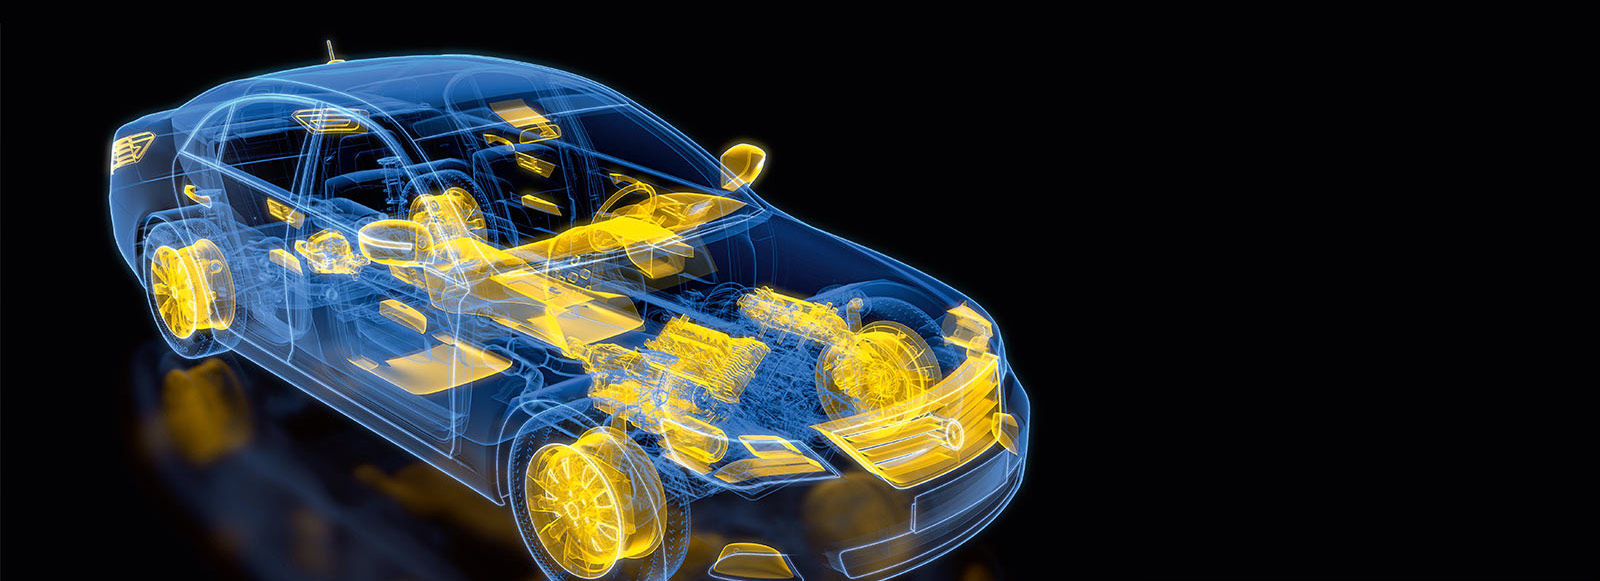 transparent graphic of a car